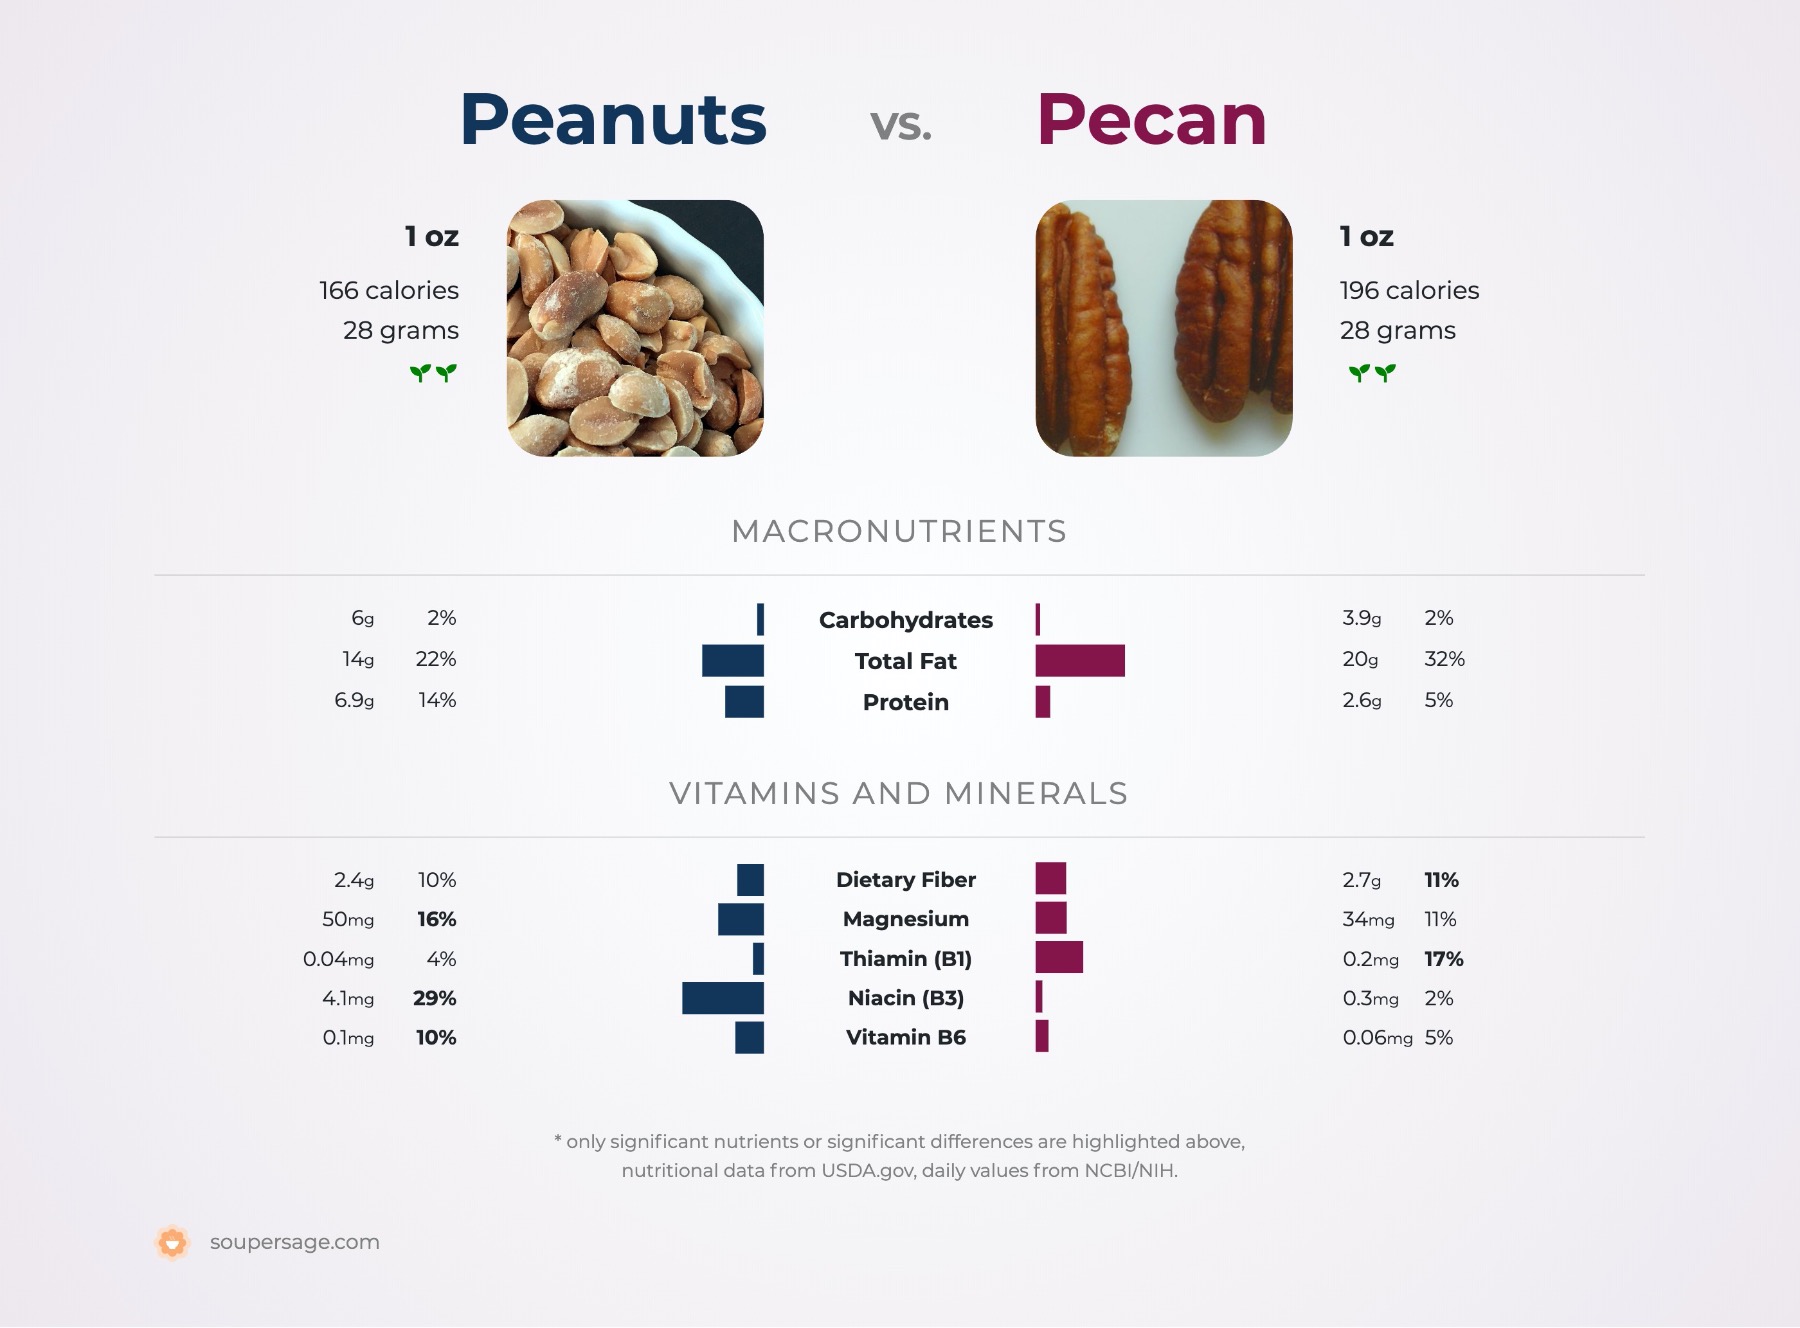 nutrition comparison of peanuts vs. pecan